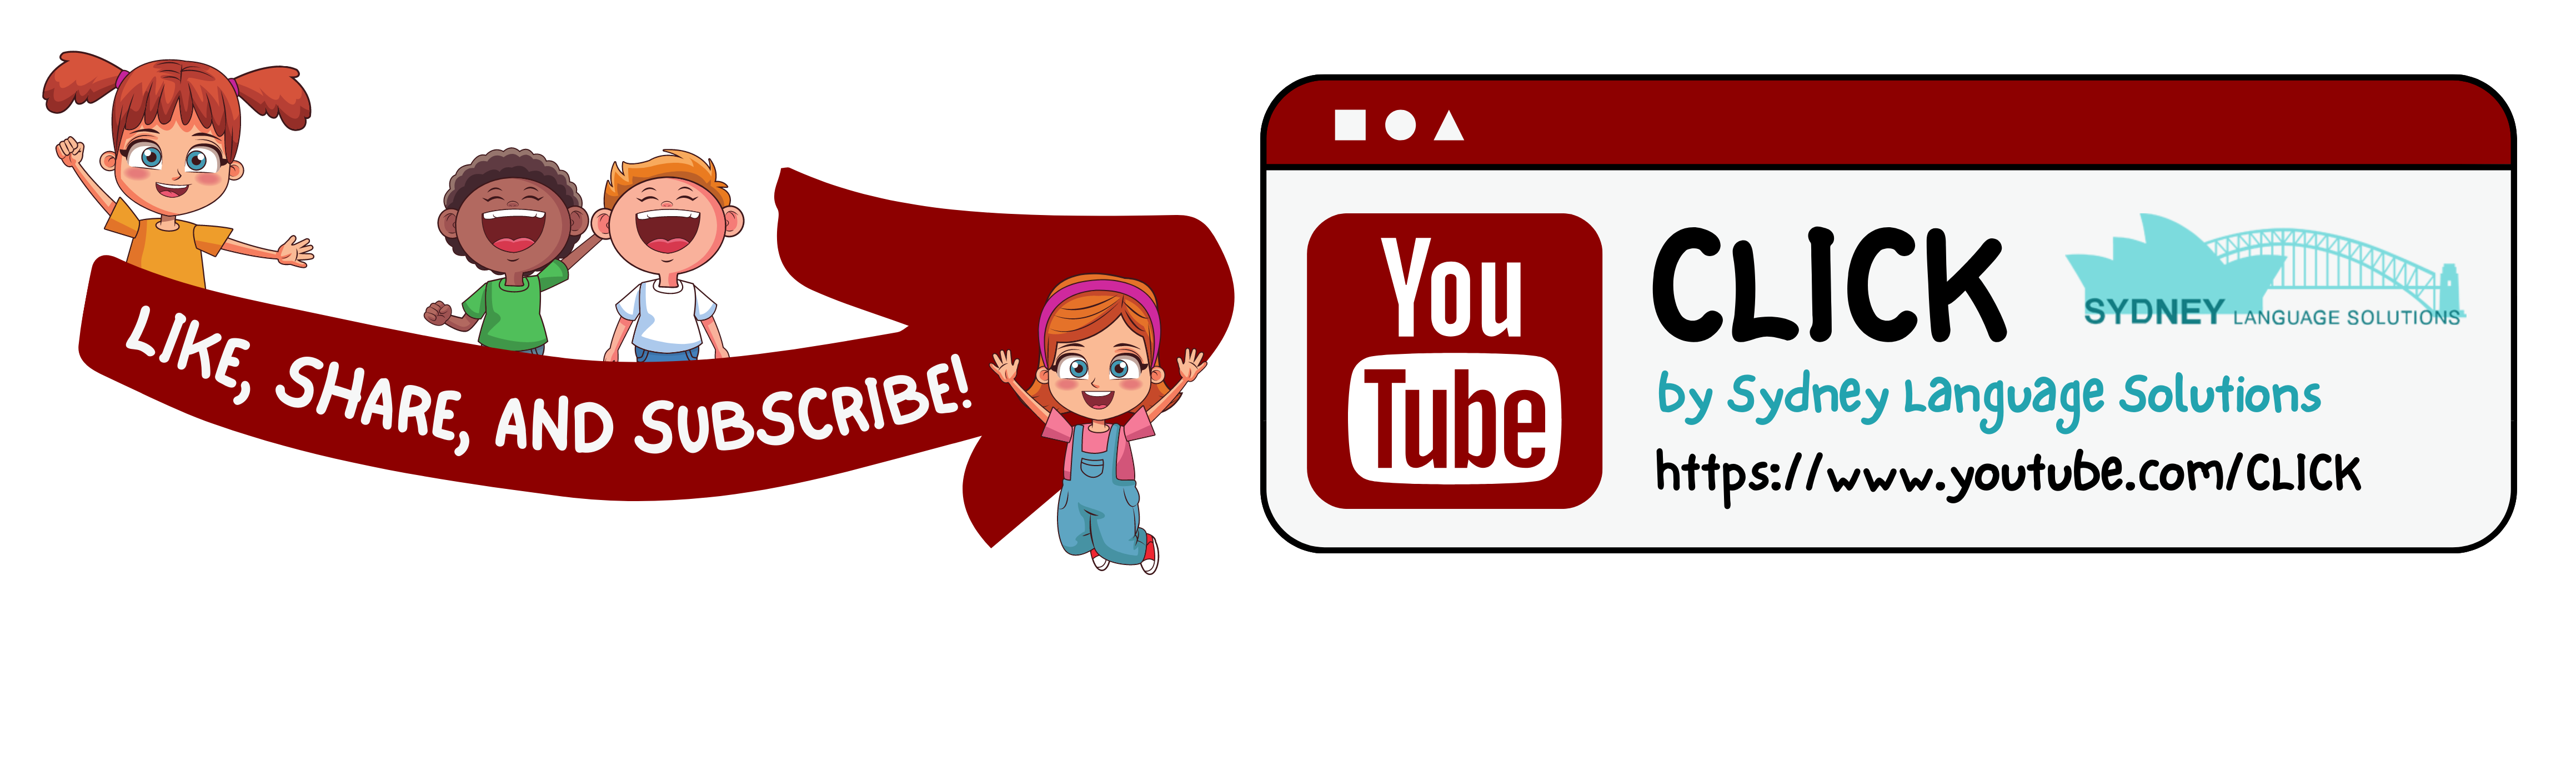 Online language for Kids youtube link